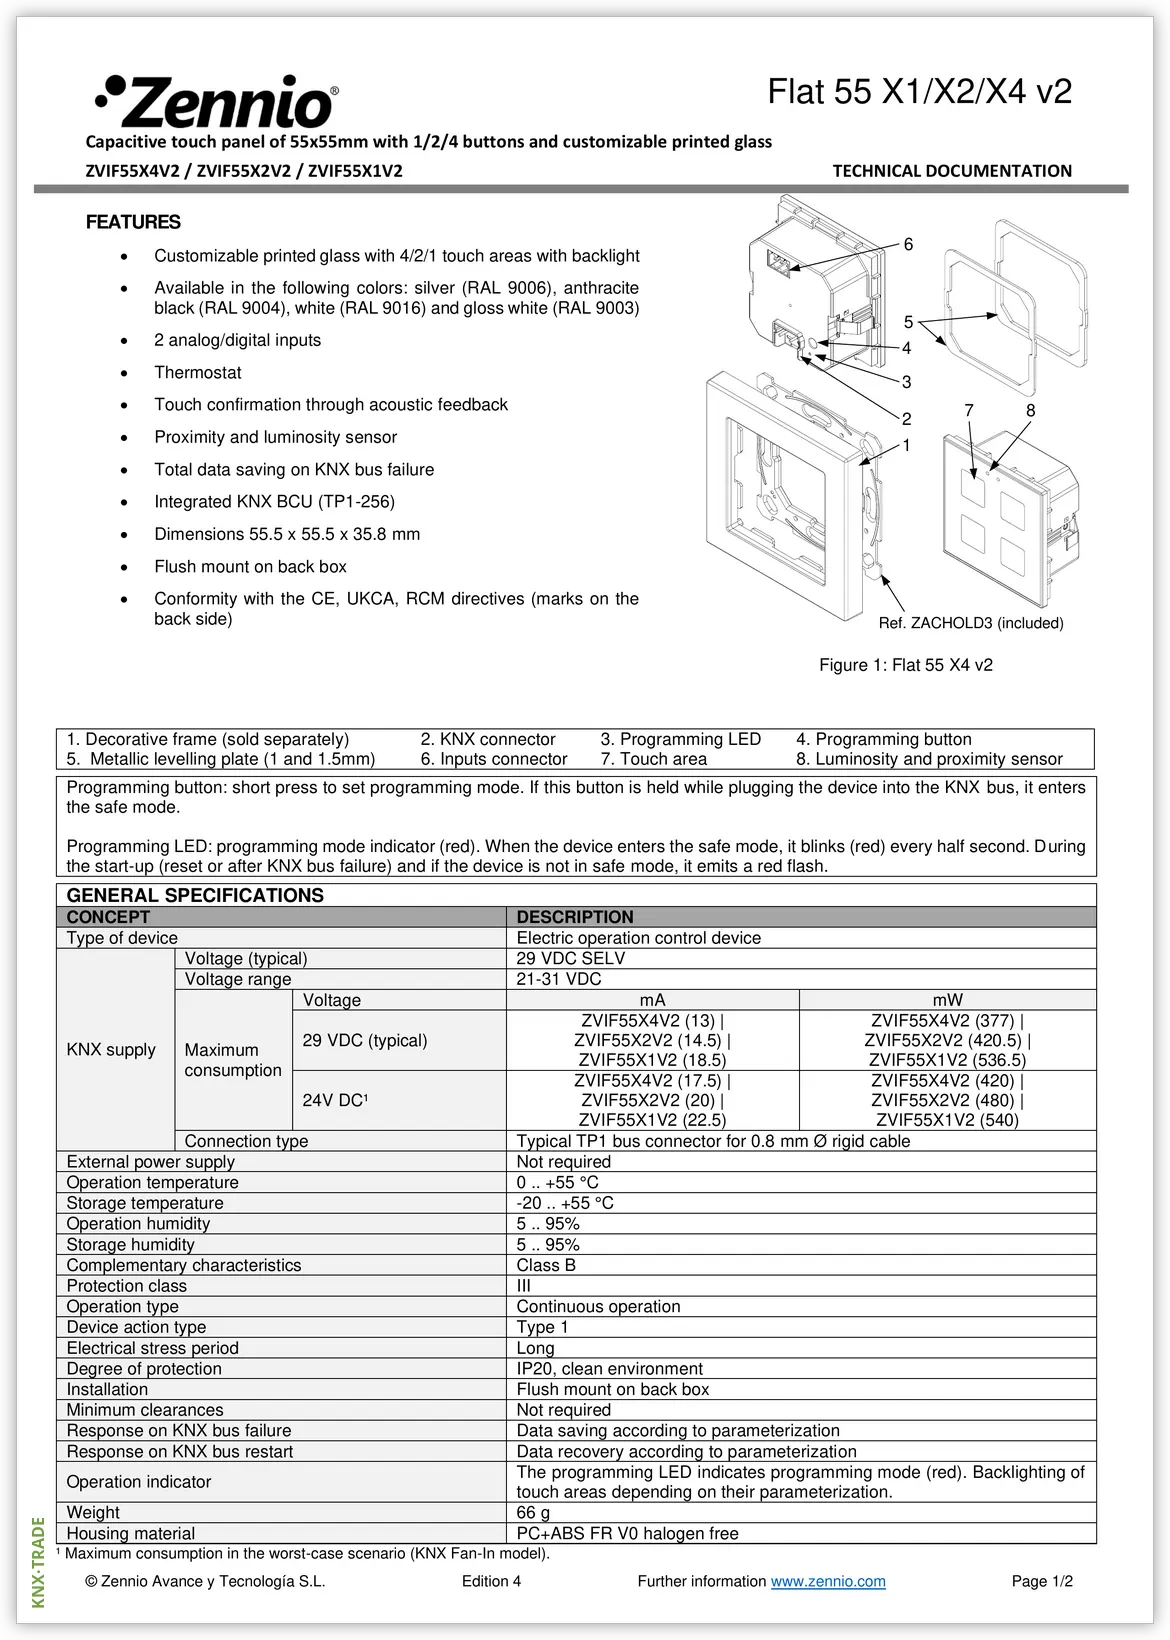 Datasheet (1) Zennio [ZVIF55XXV2] Flat 55 v2 / Выключатель сенсорный KNX, с подсветкой пиктограмм, 55x55мм